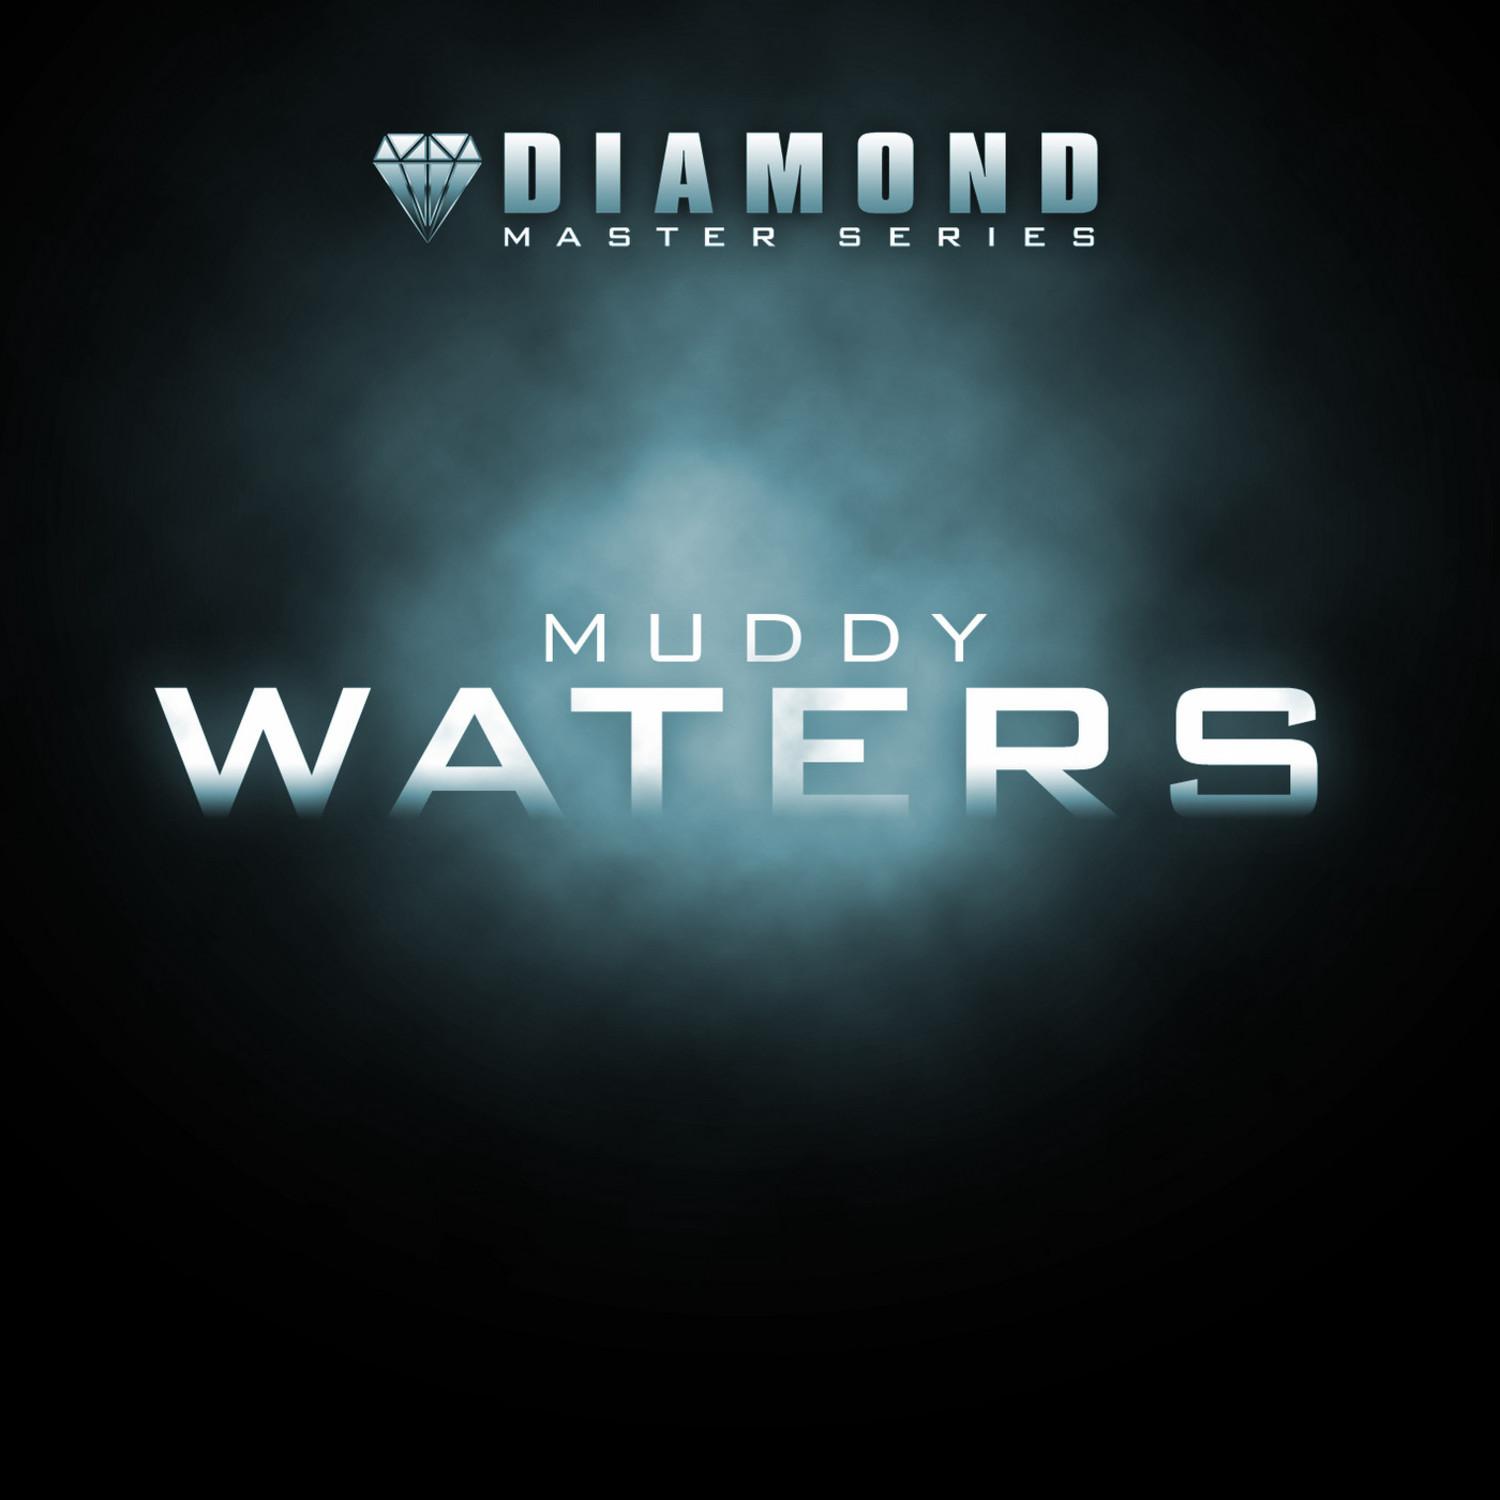 Diamond Master Seires - Muddy Waters